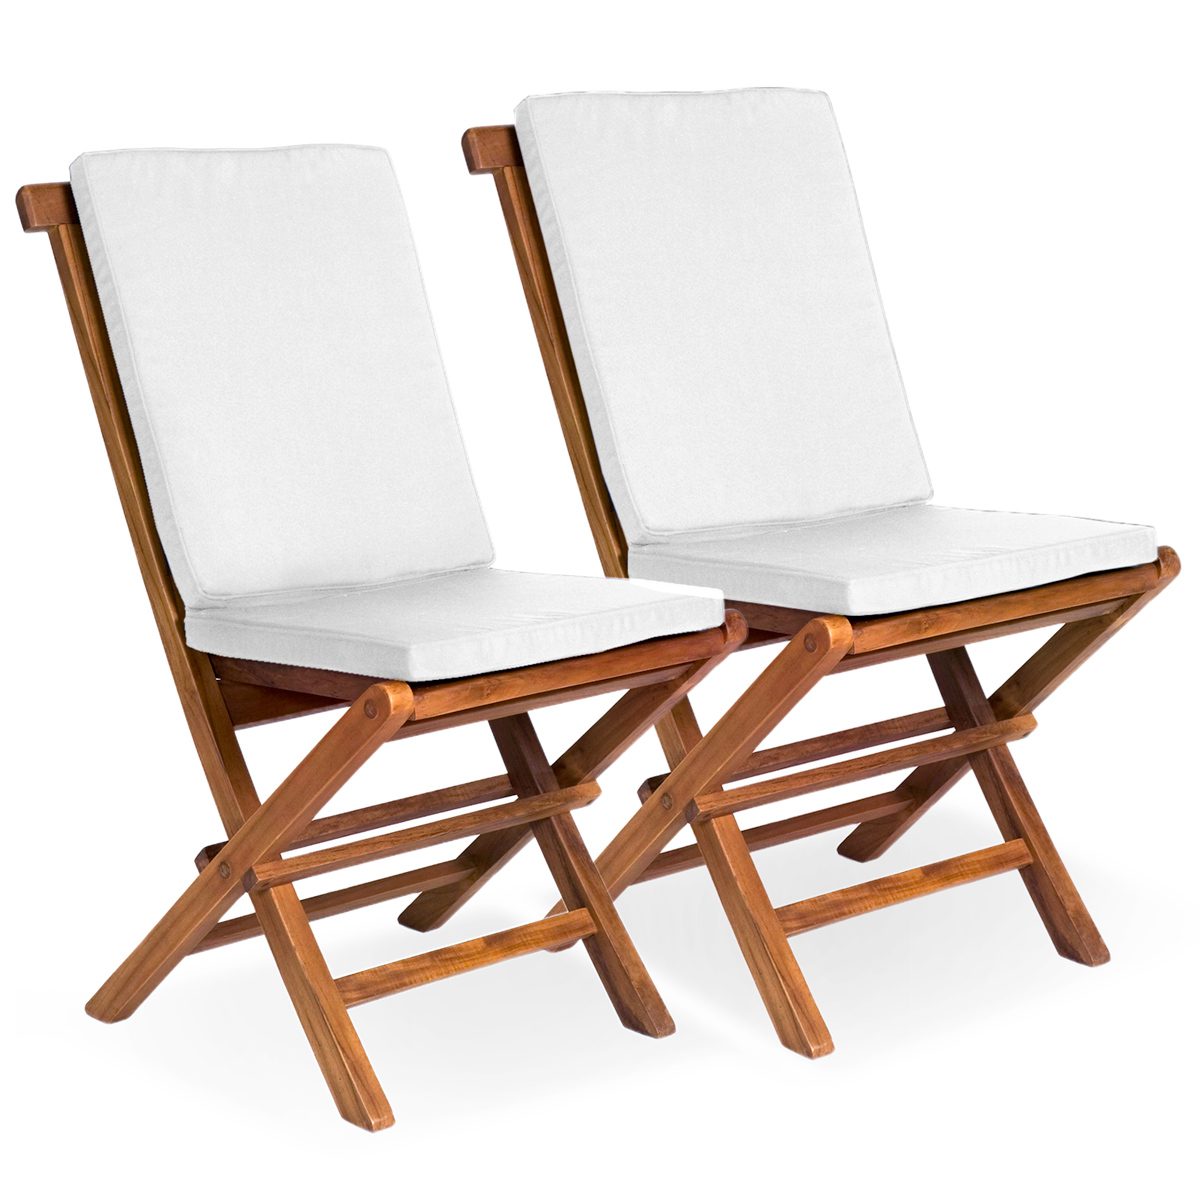 2 piece Teak Folding Chair set